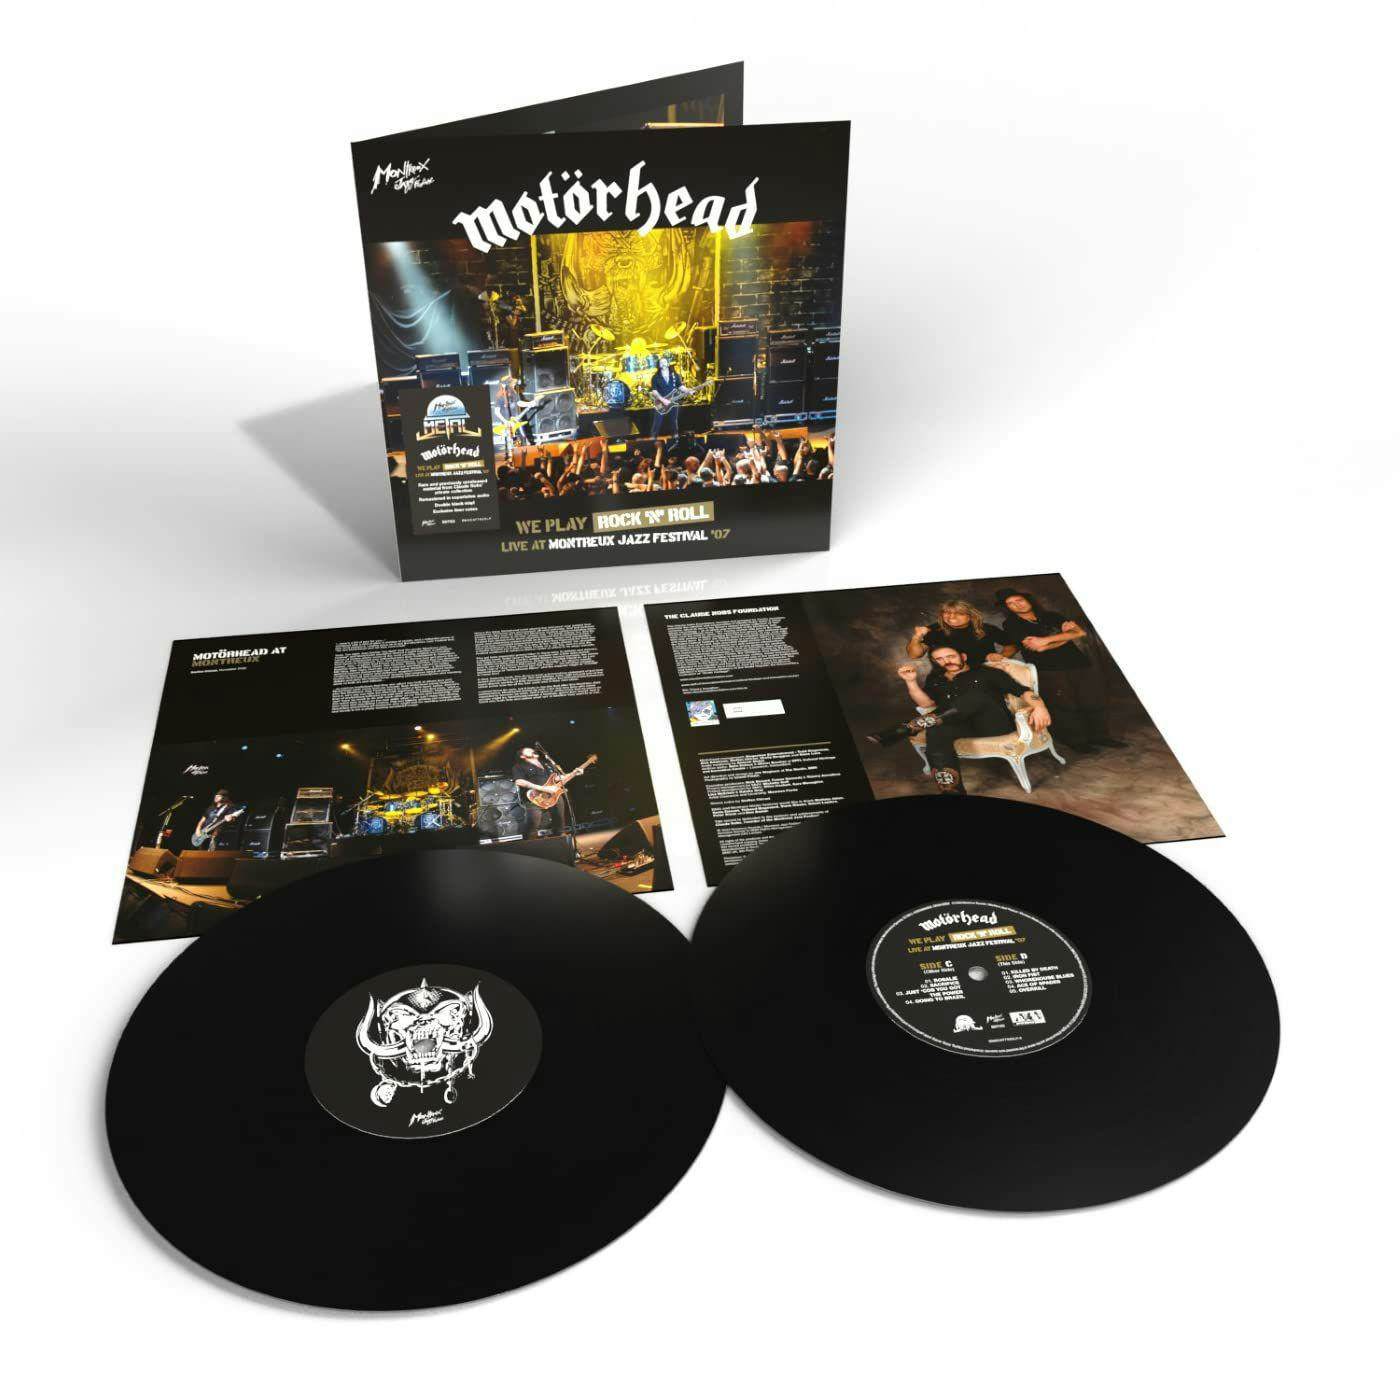 Motörhead Live At Montreux Jazz Festival '07 (2LP) Vinyl Record